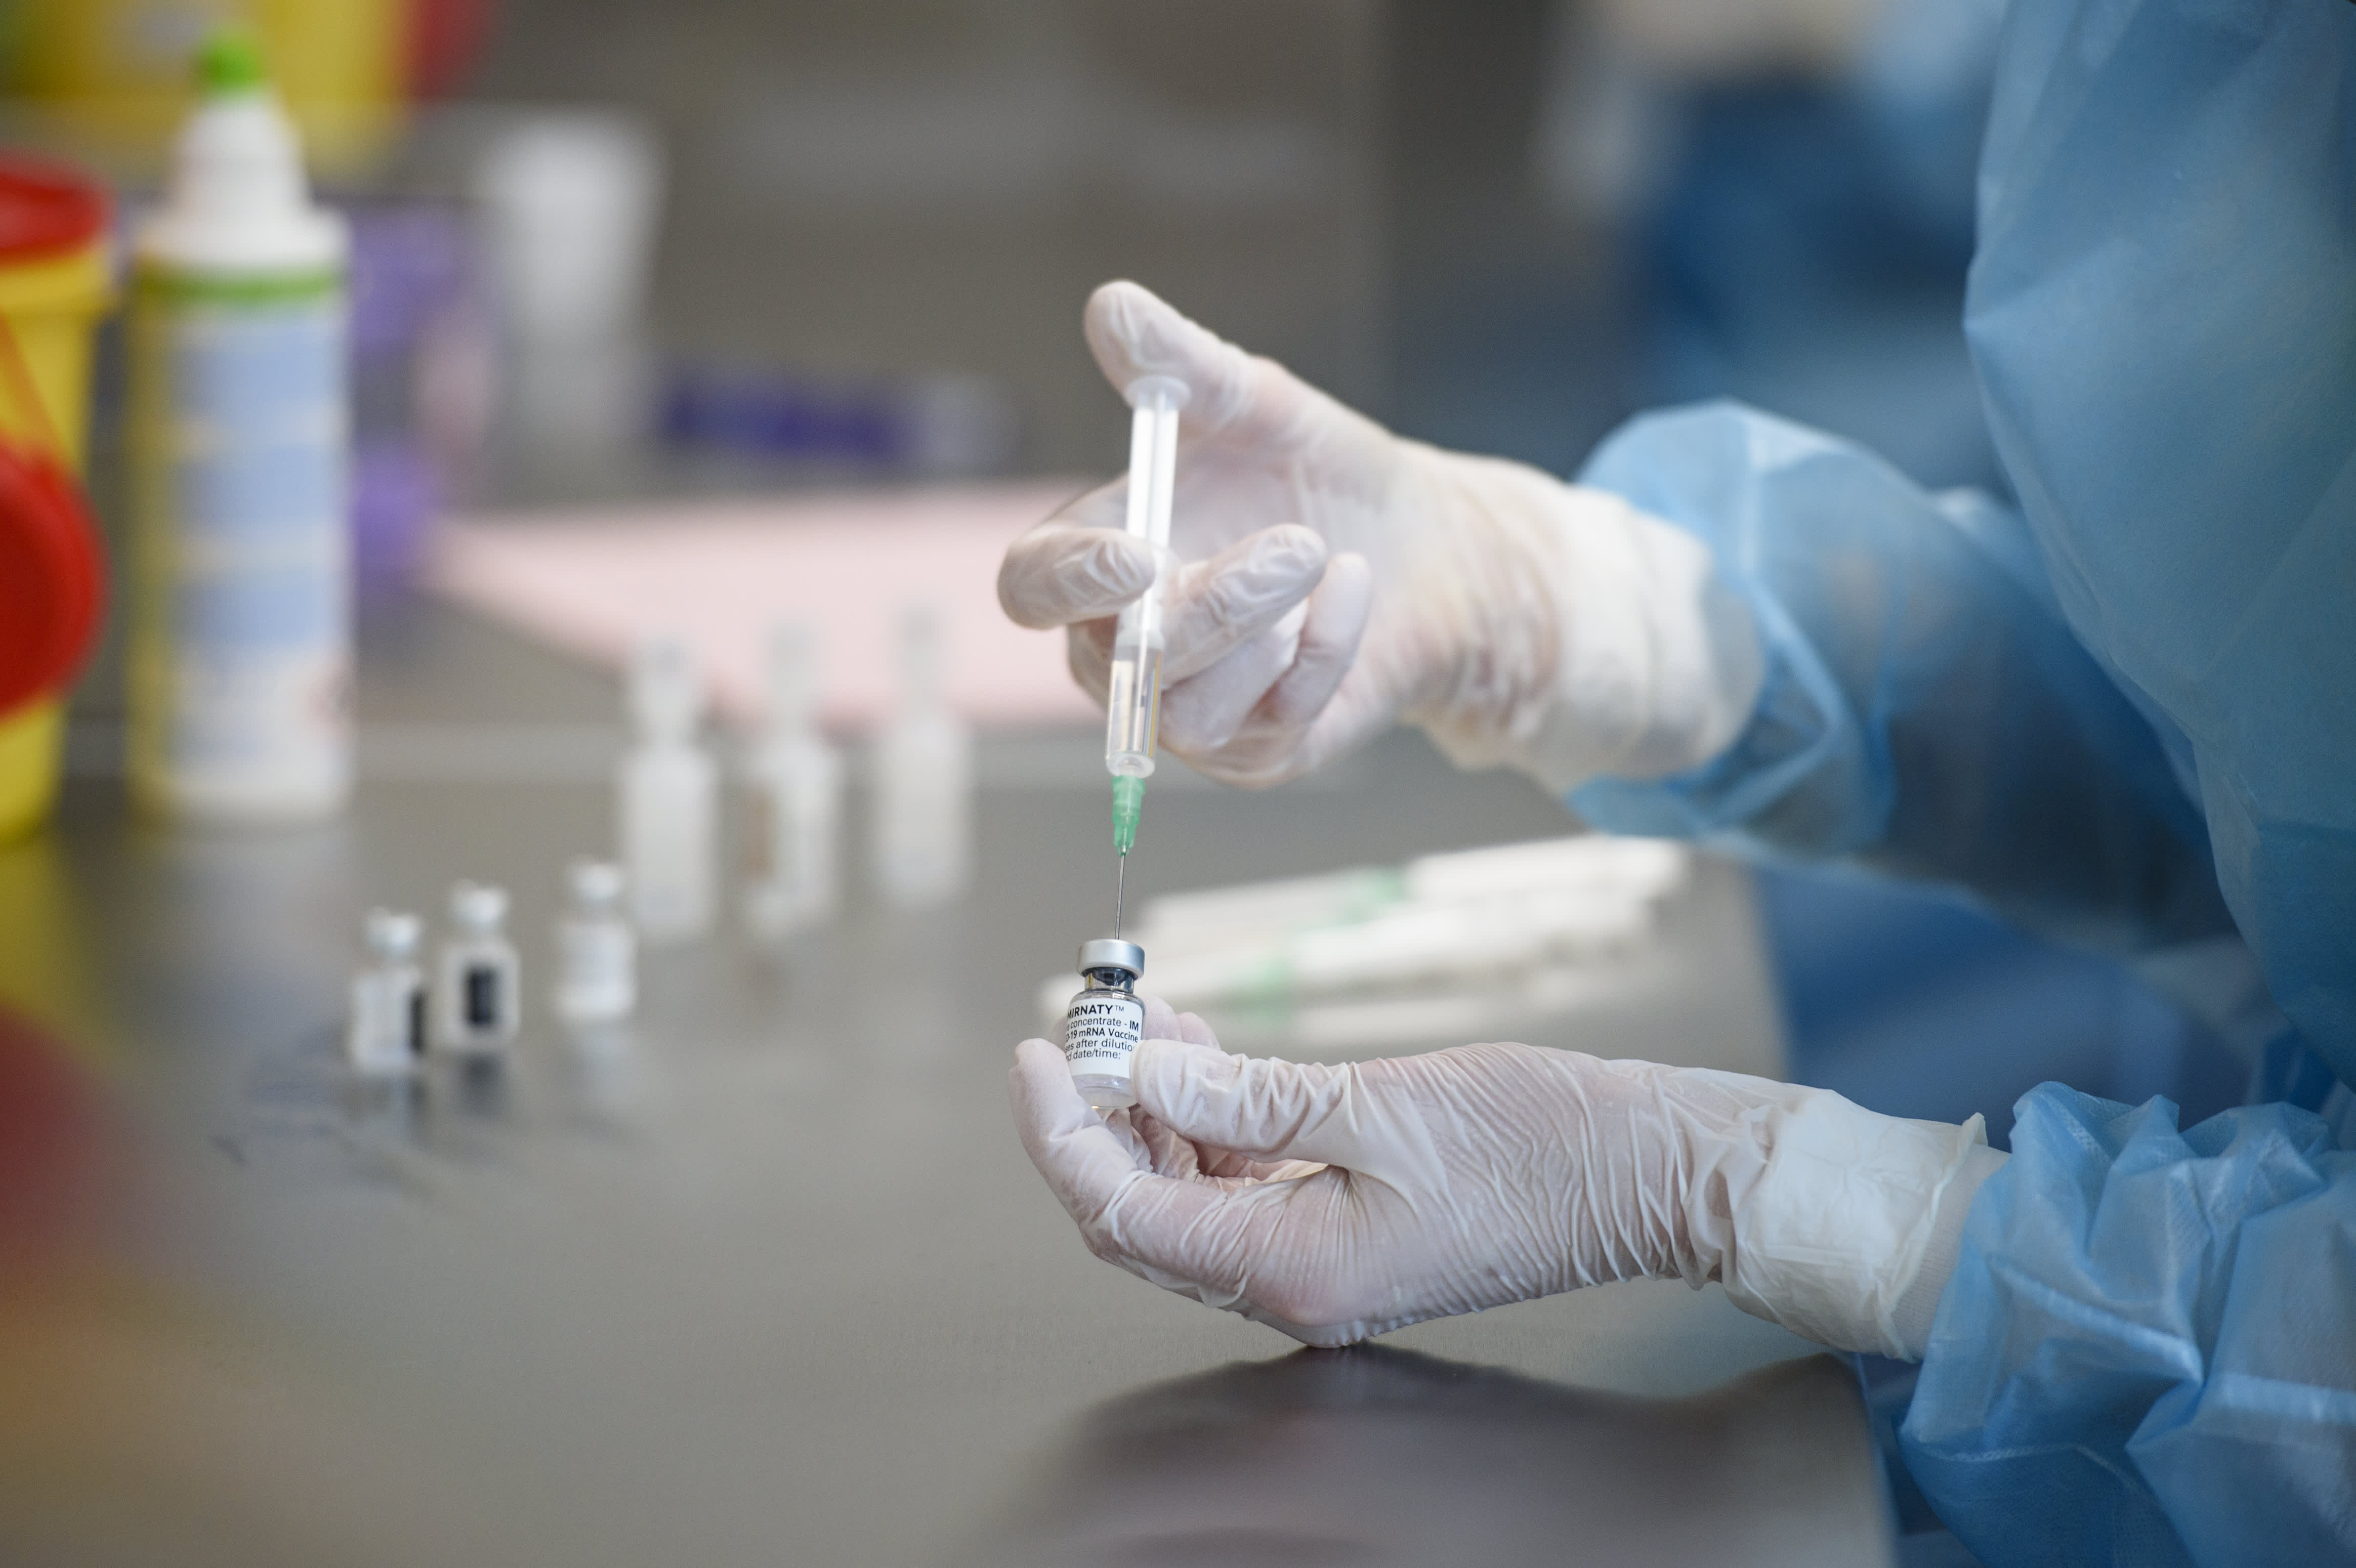 EU drug regulator finds possible link between AstraZeneca Covid vaccine and blood clots